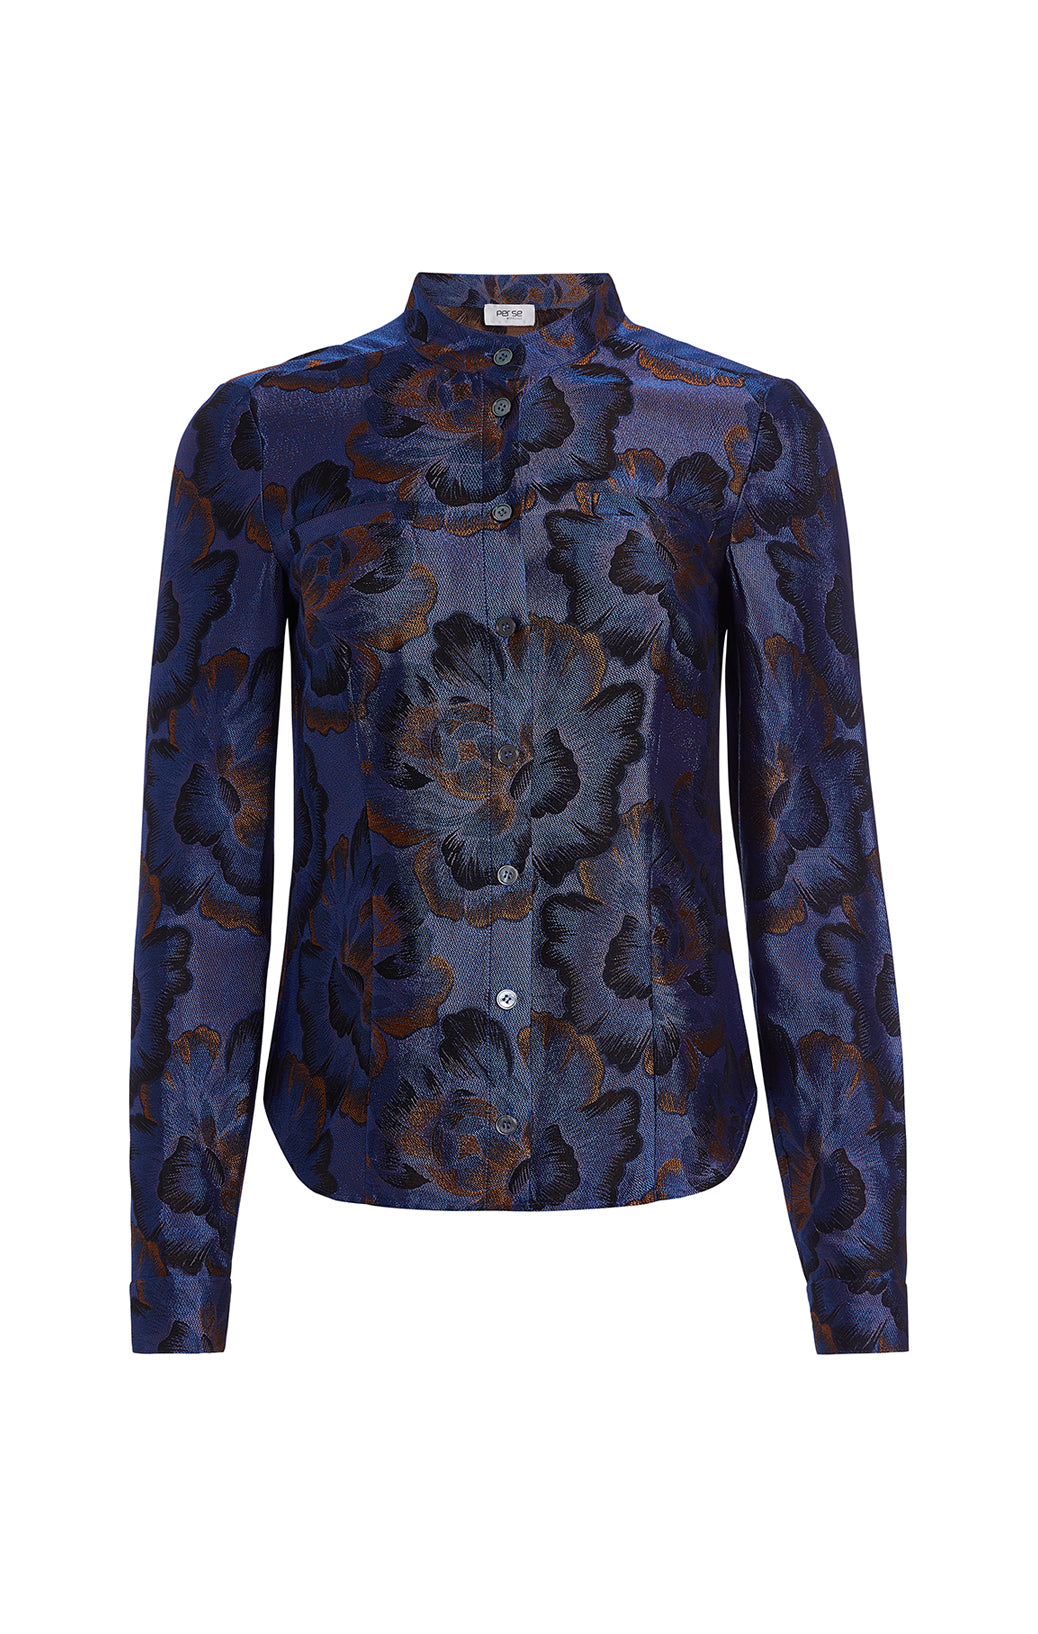 Magnifique - French Floral Jacquard Jacket -  Product Image